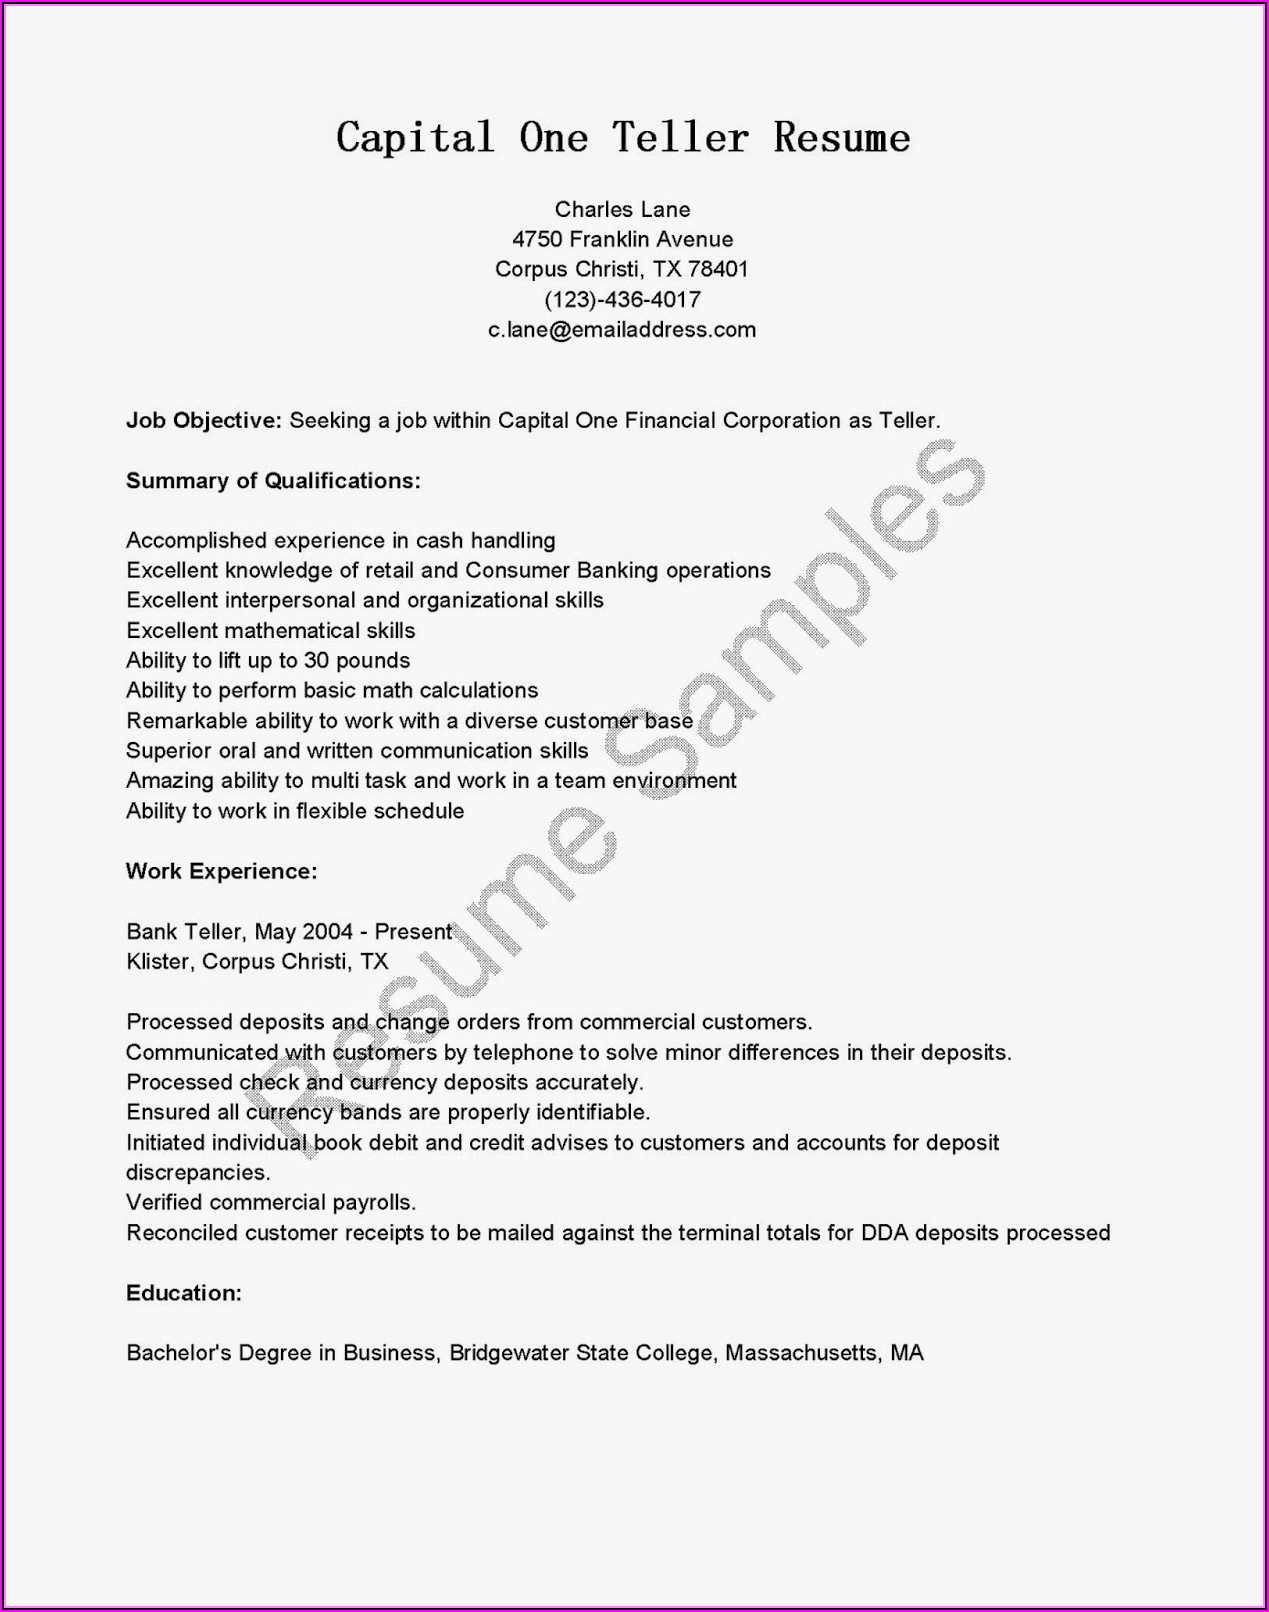 Professional Nursing Resume Services